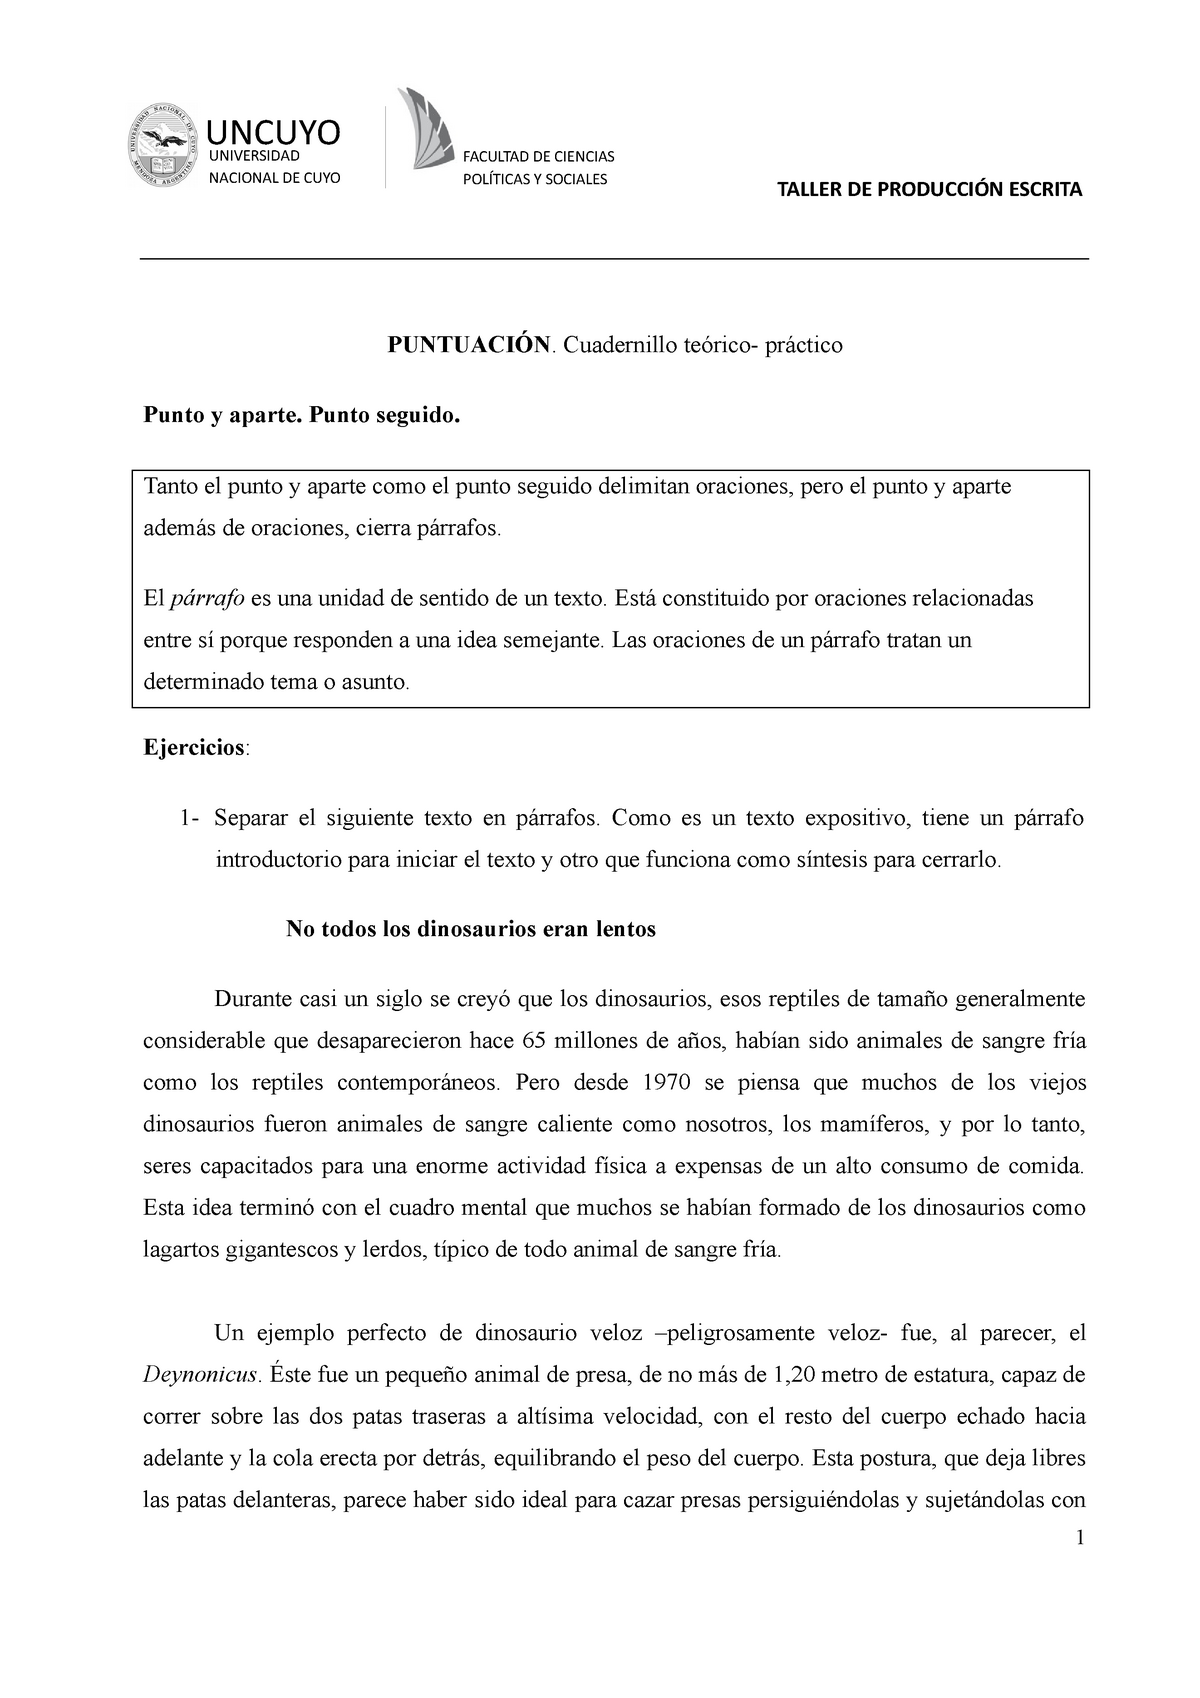 21 TPE Puntuación cuadernillo teórico-práctico - criminal law - UNIJJAR -  Studocu